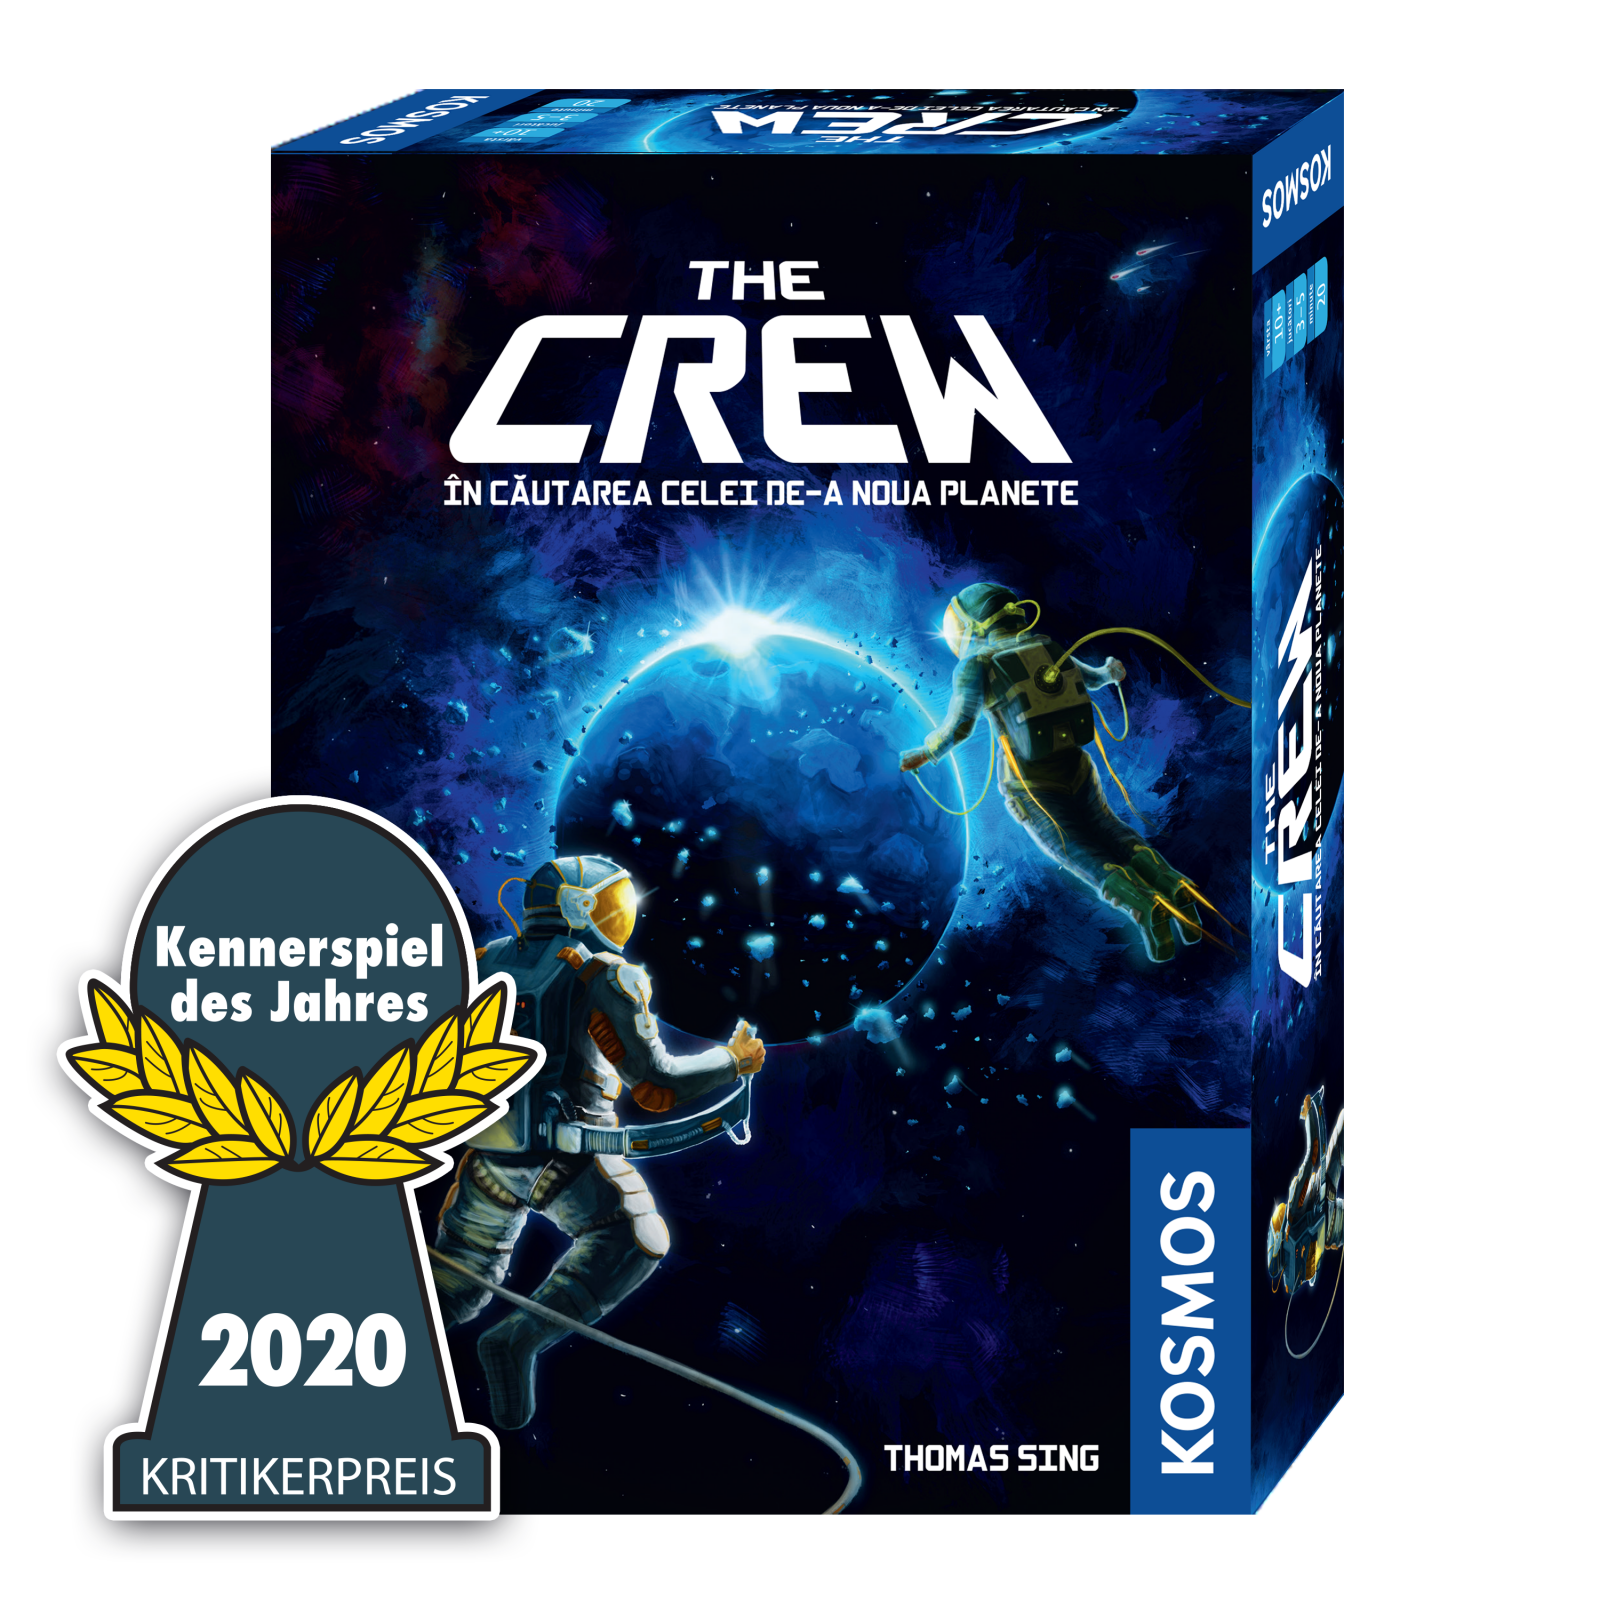 The Crew - In cautarea celei de-a noua planete (RO)